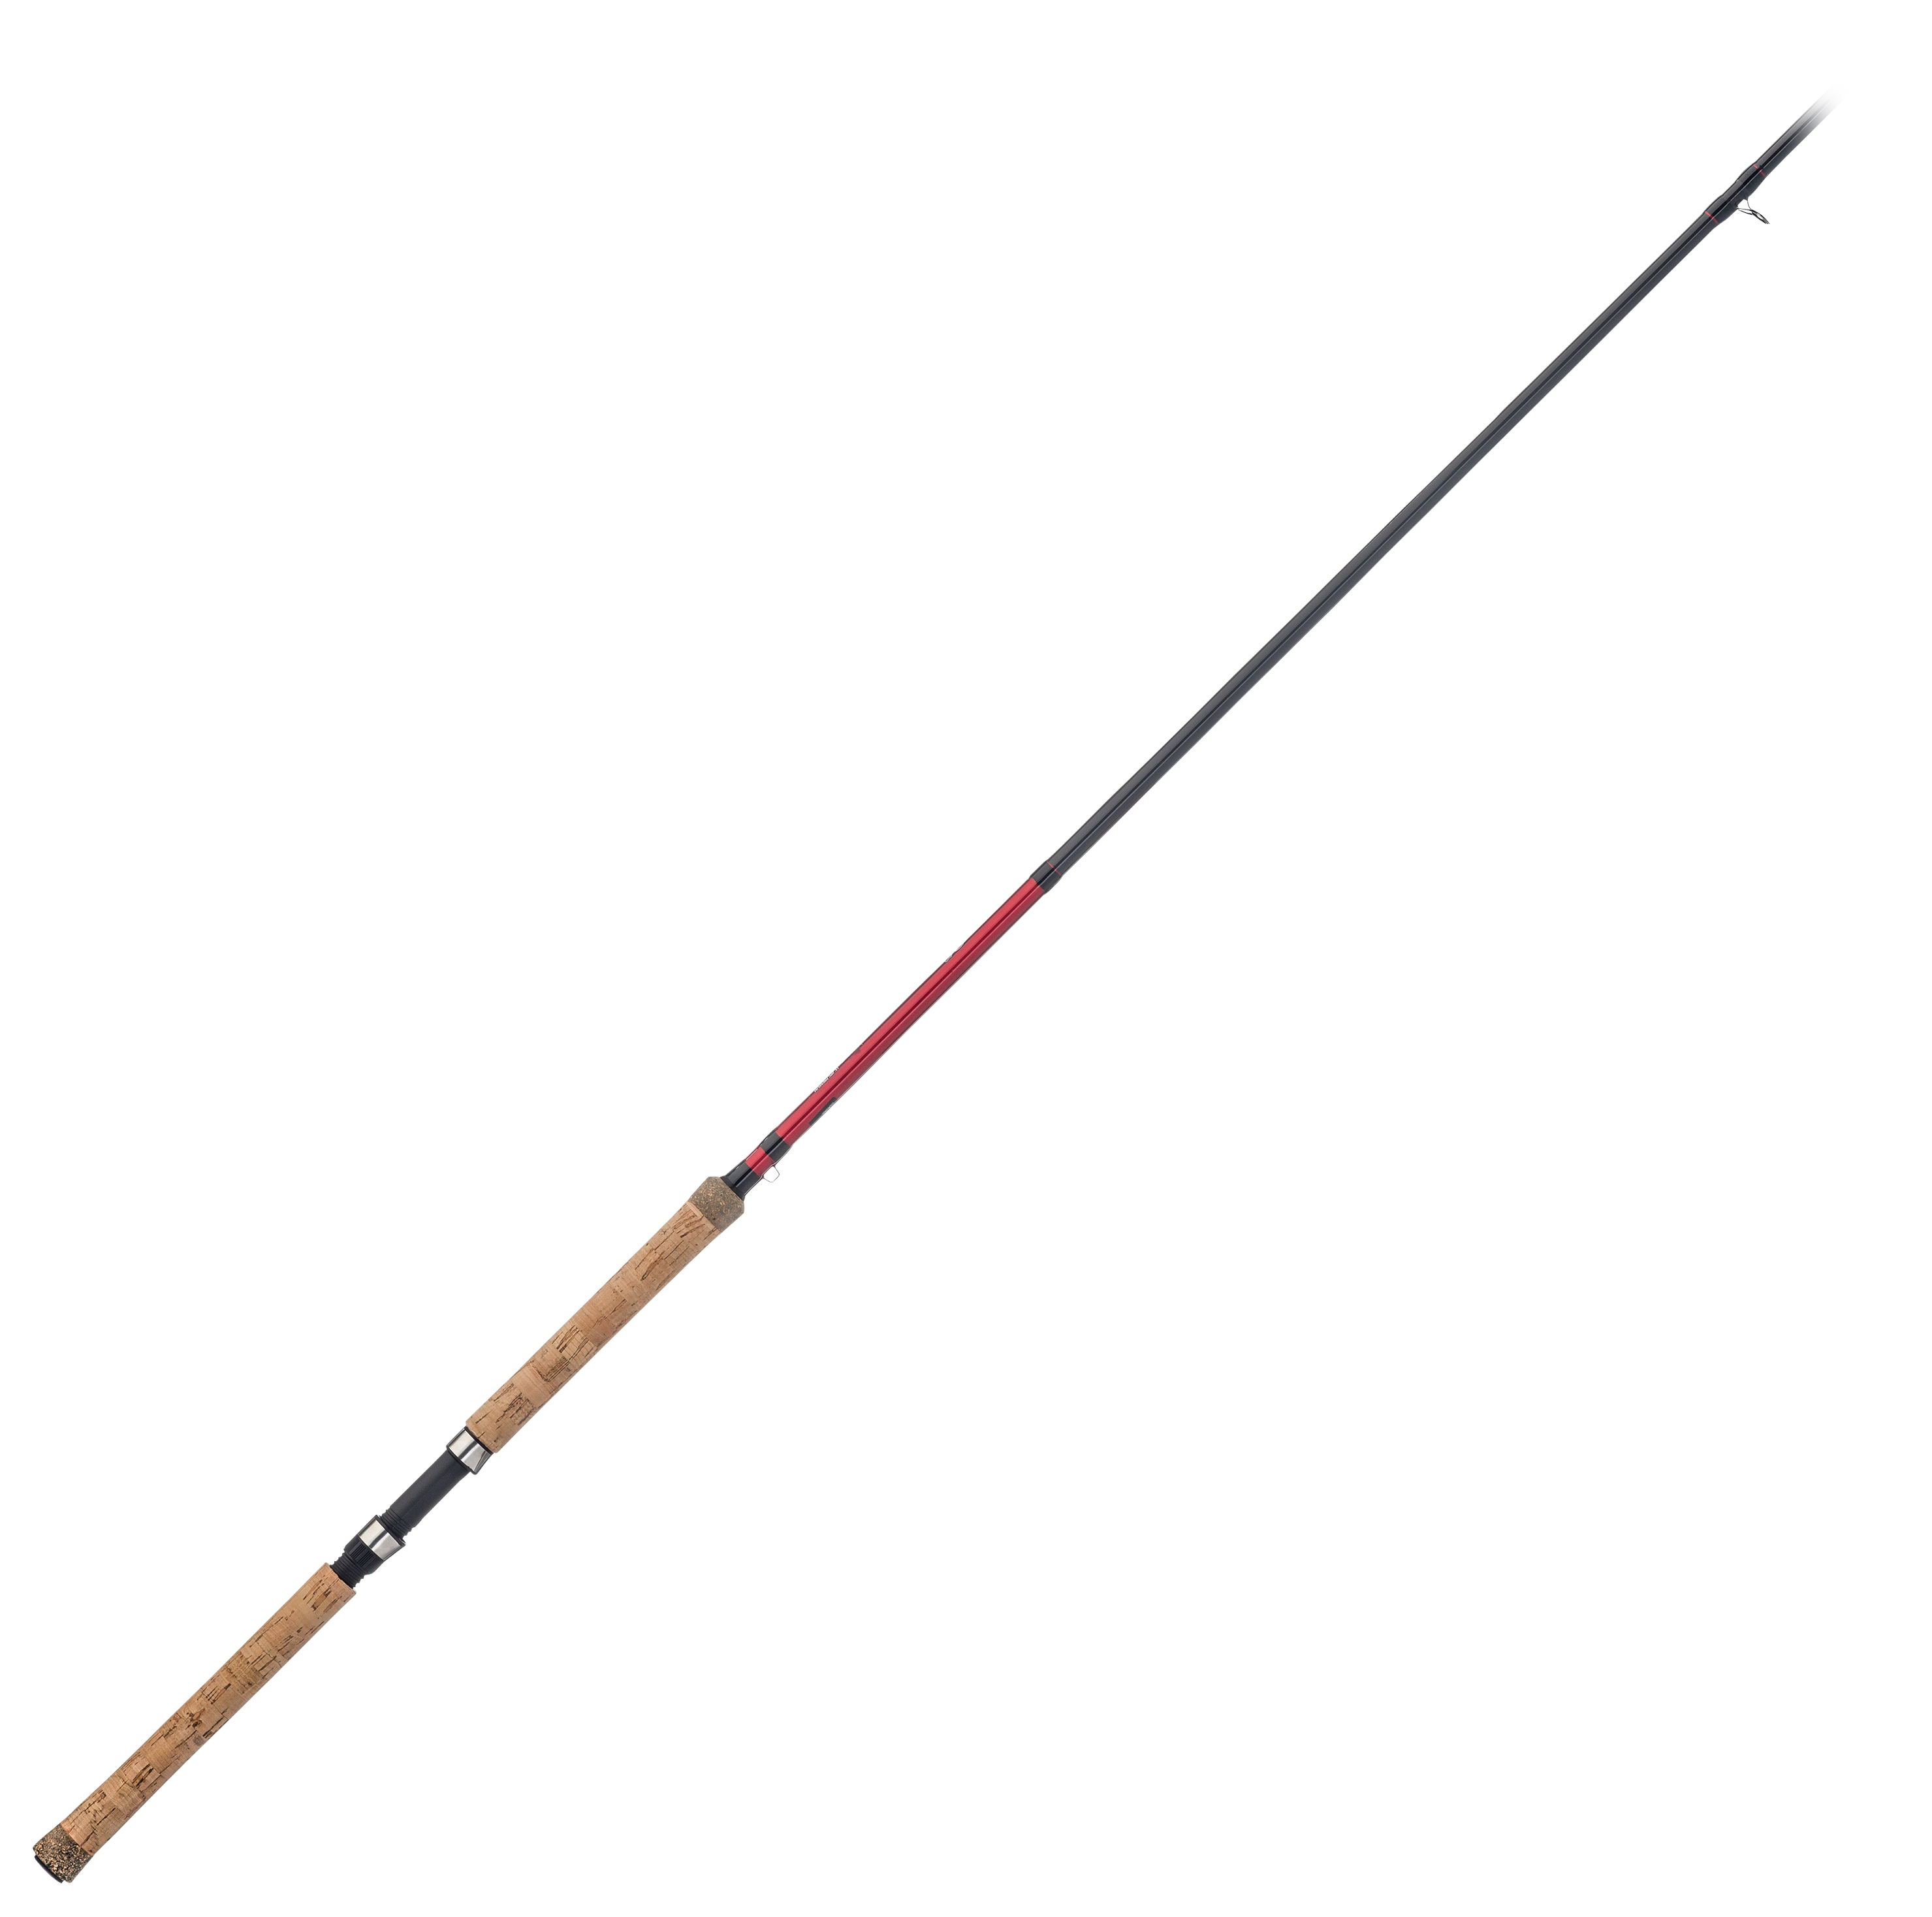 Berkley Cherrywood HD Spinning Fishing Rod, Sports Equipment